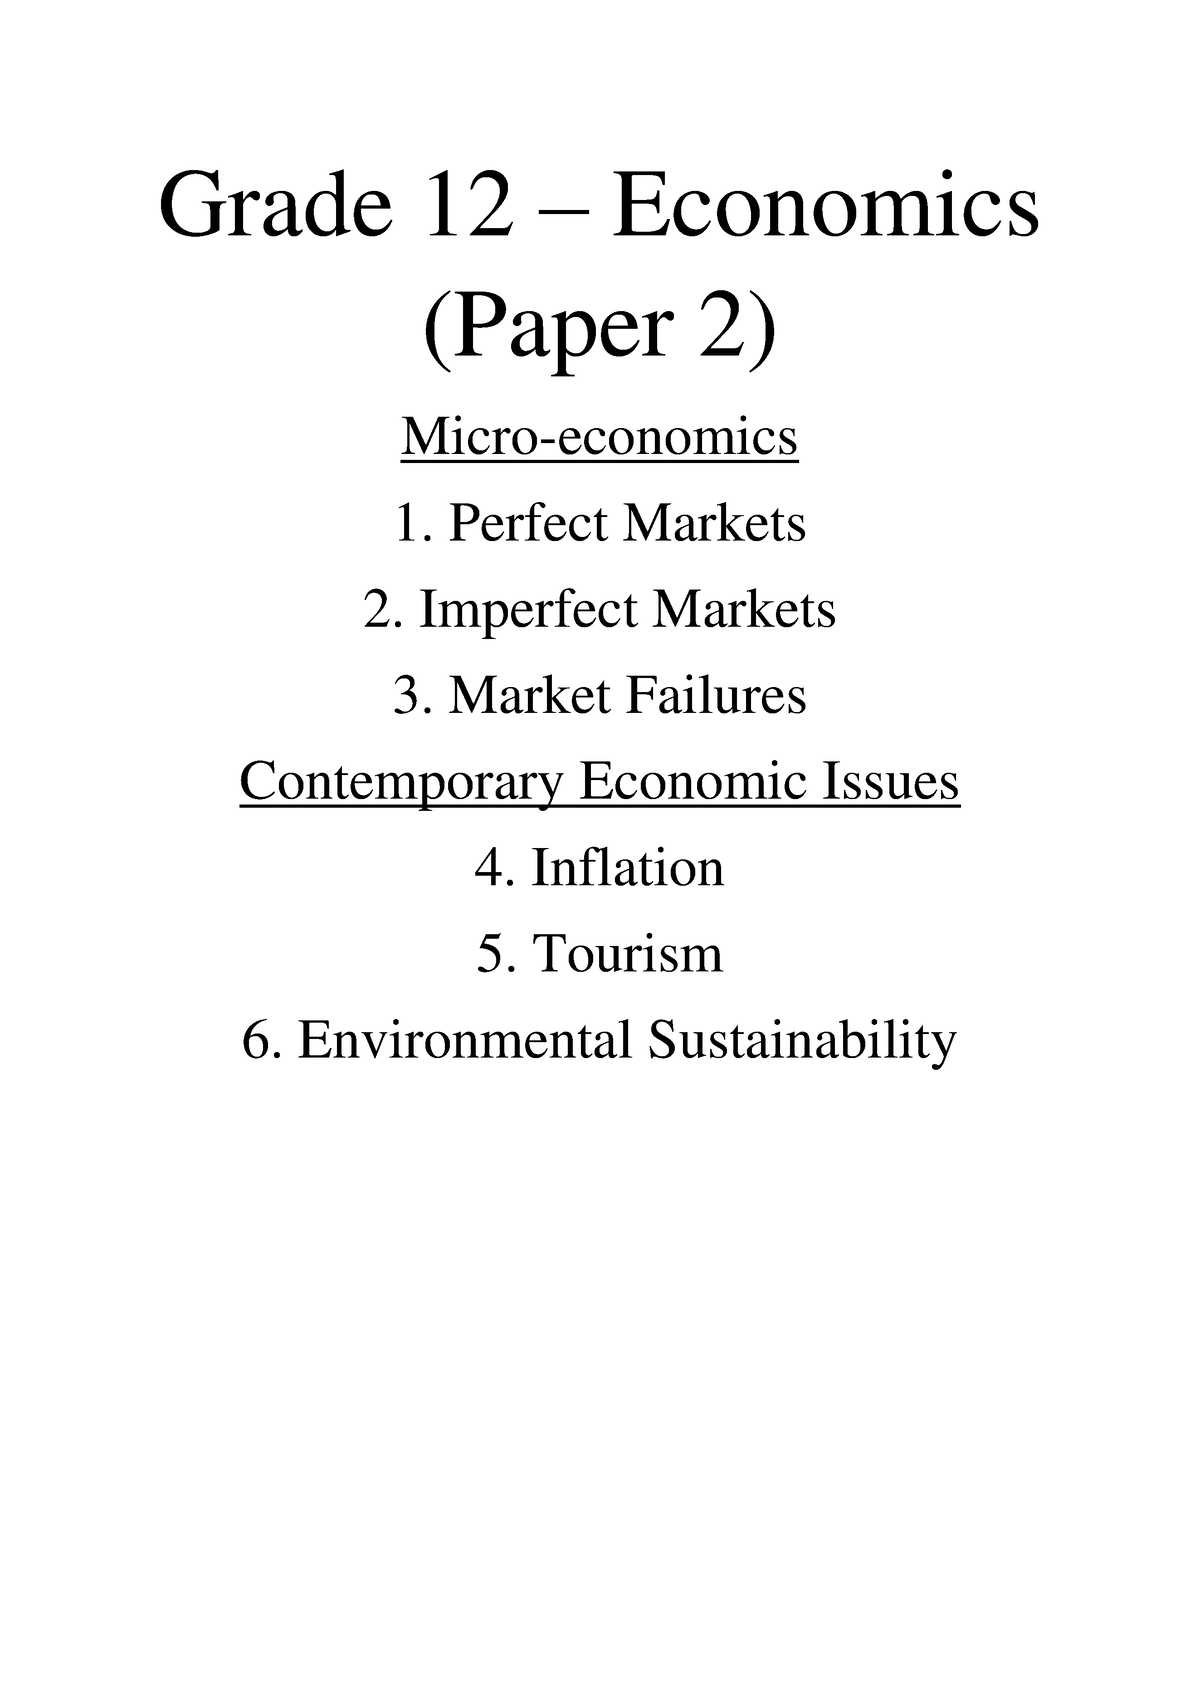 micro economics essays grade 12